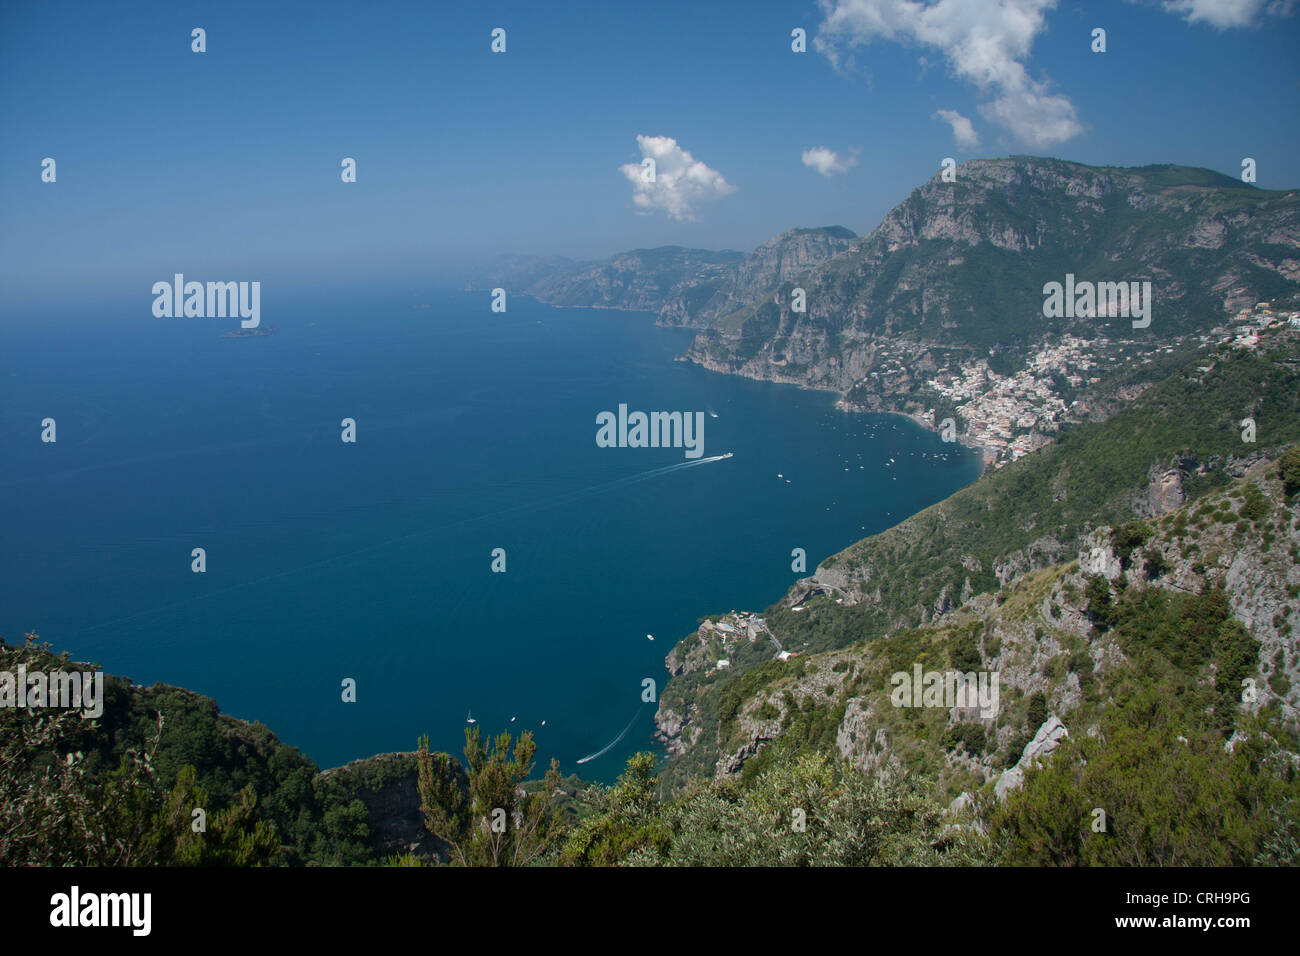 The Amalfi Coastline, near Positano, Italy Stock Photo